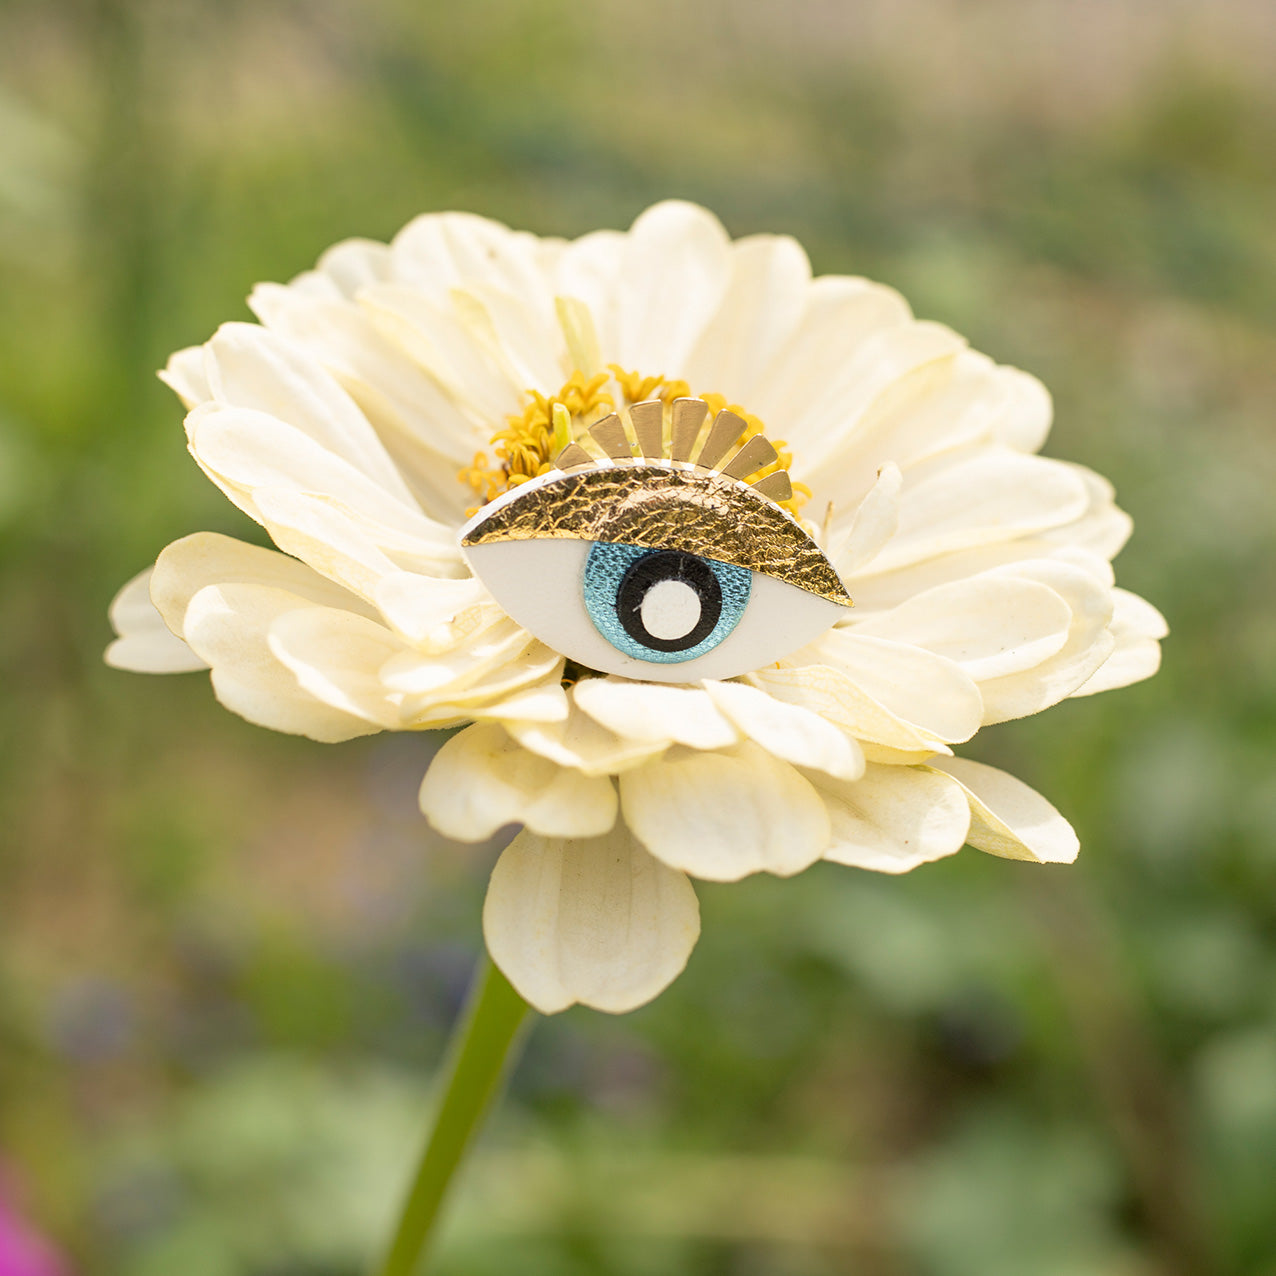 White and gold magic eye pin